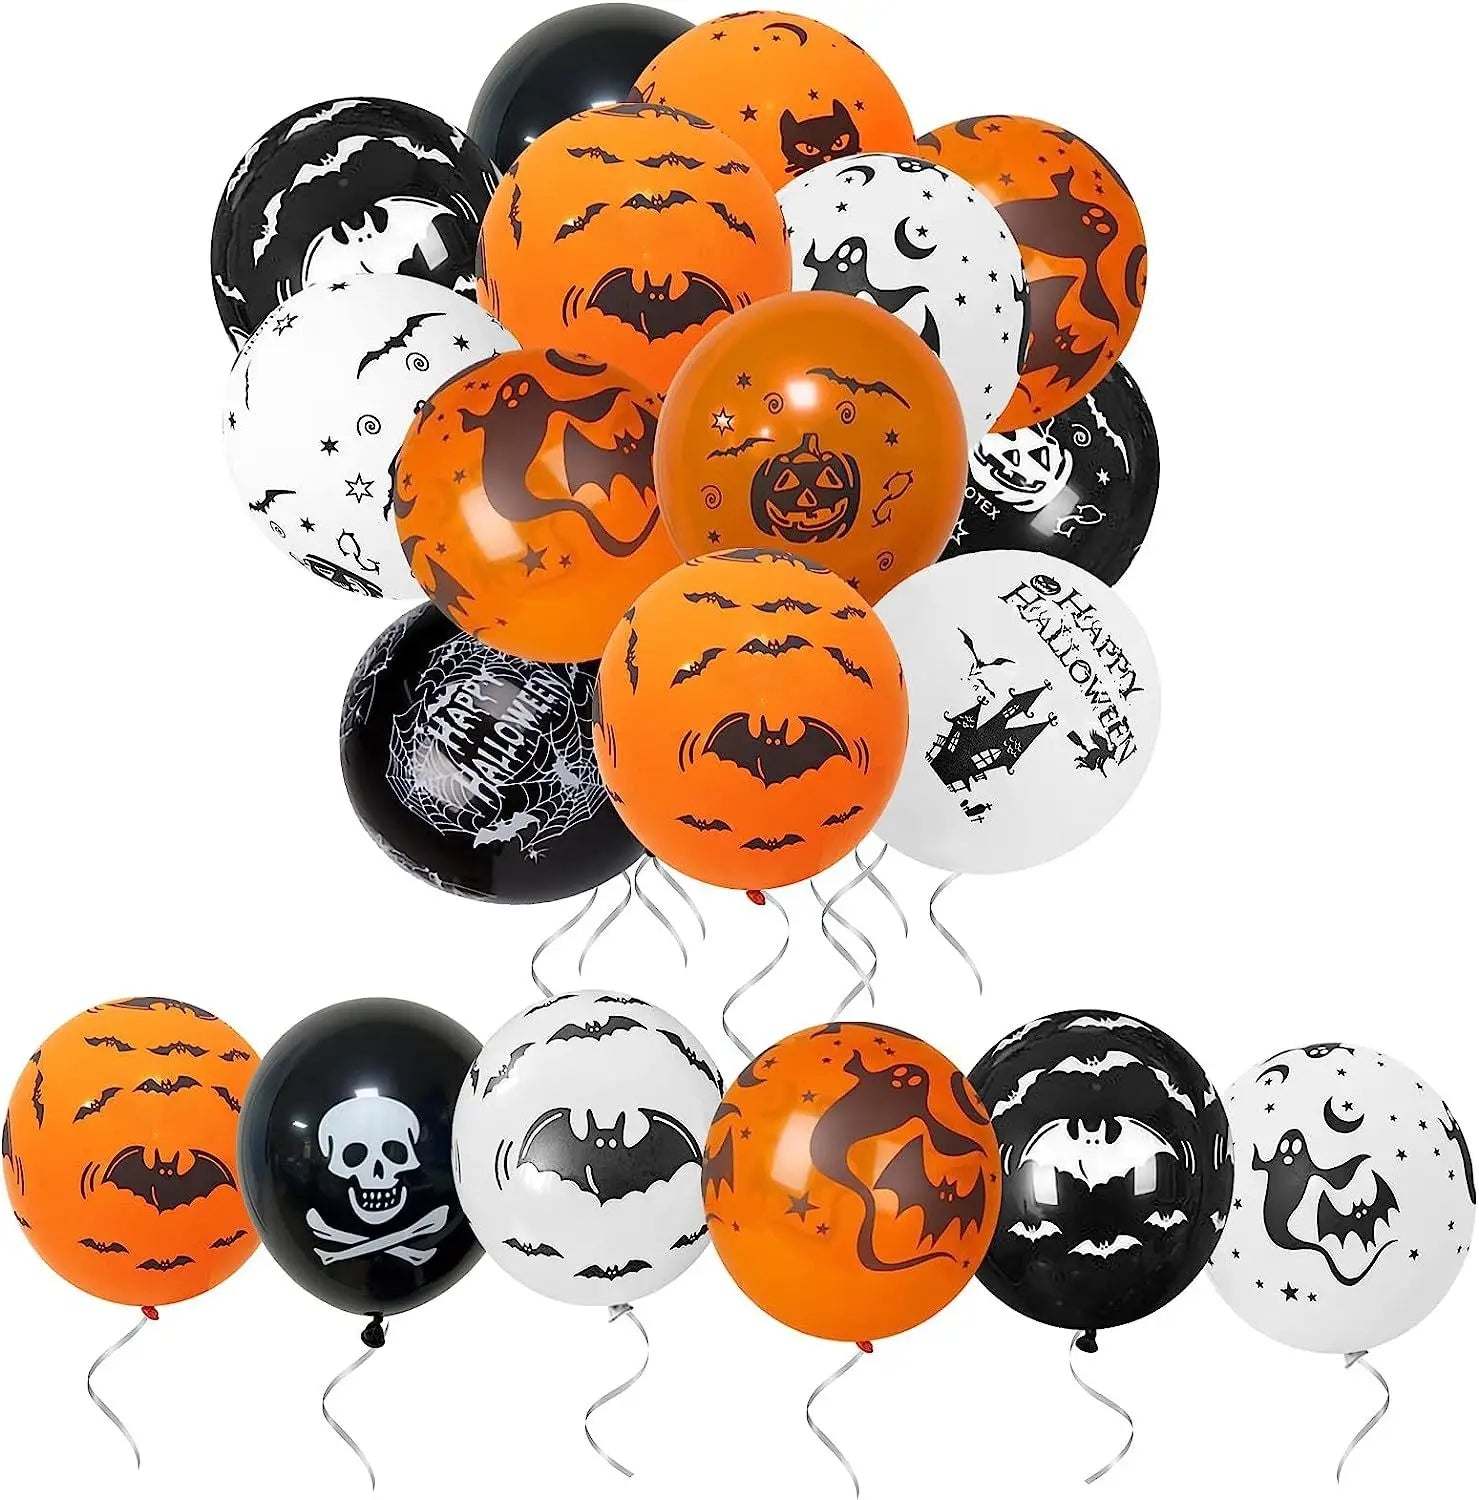 12-inch Halloween Horror Balloon